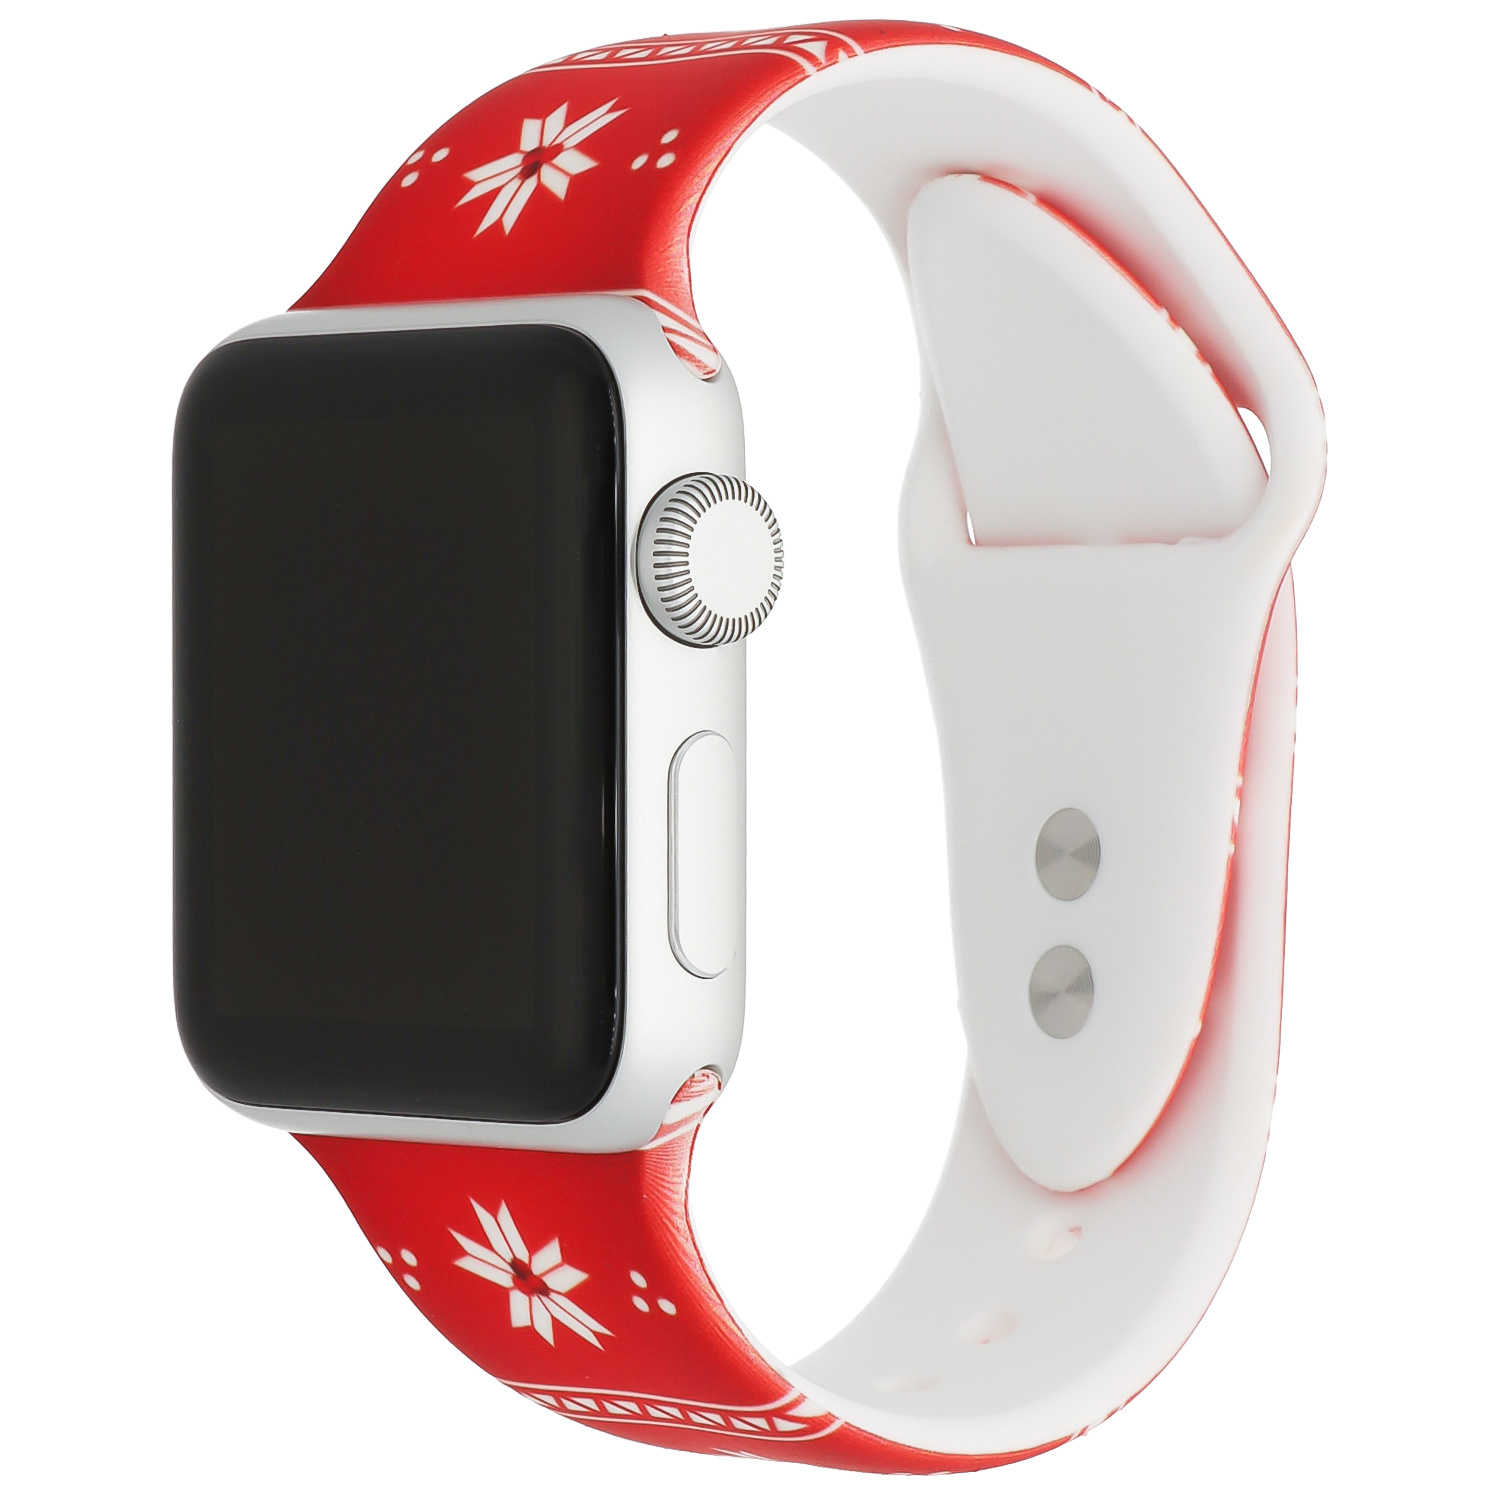 Bracelet sport imprimé Apple Watch - rouge poinsettia de Noël